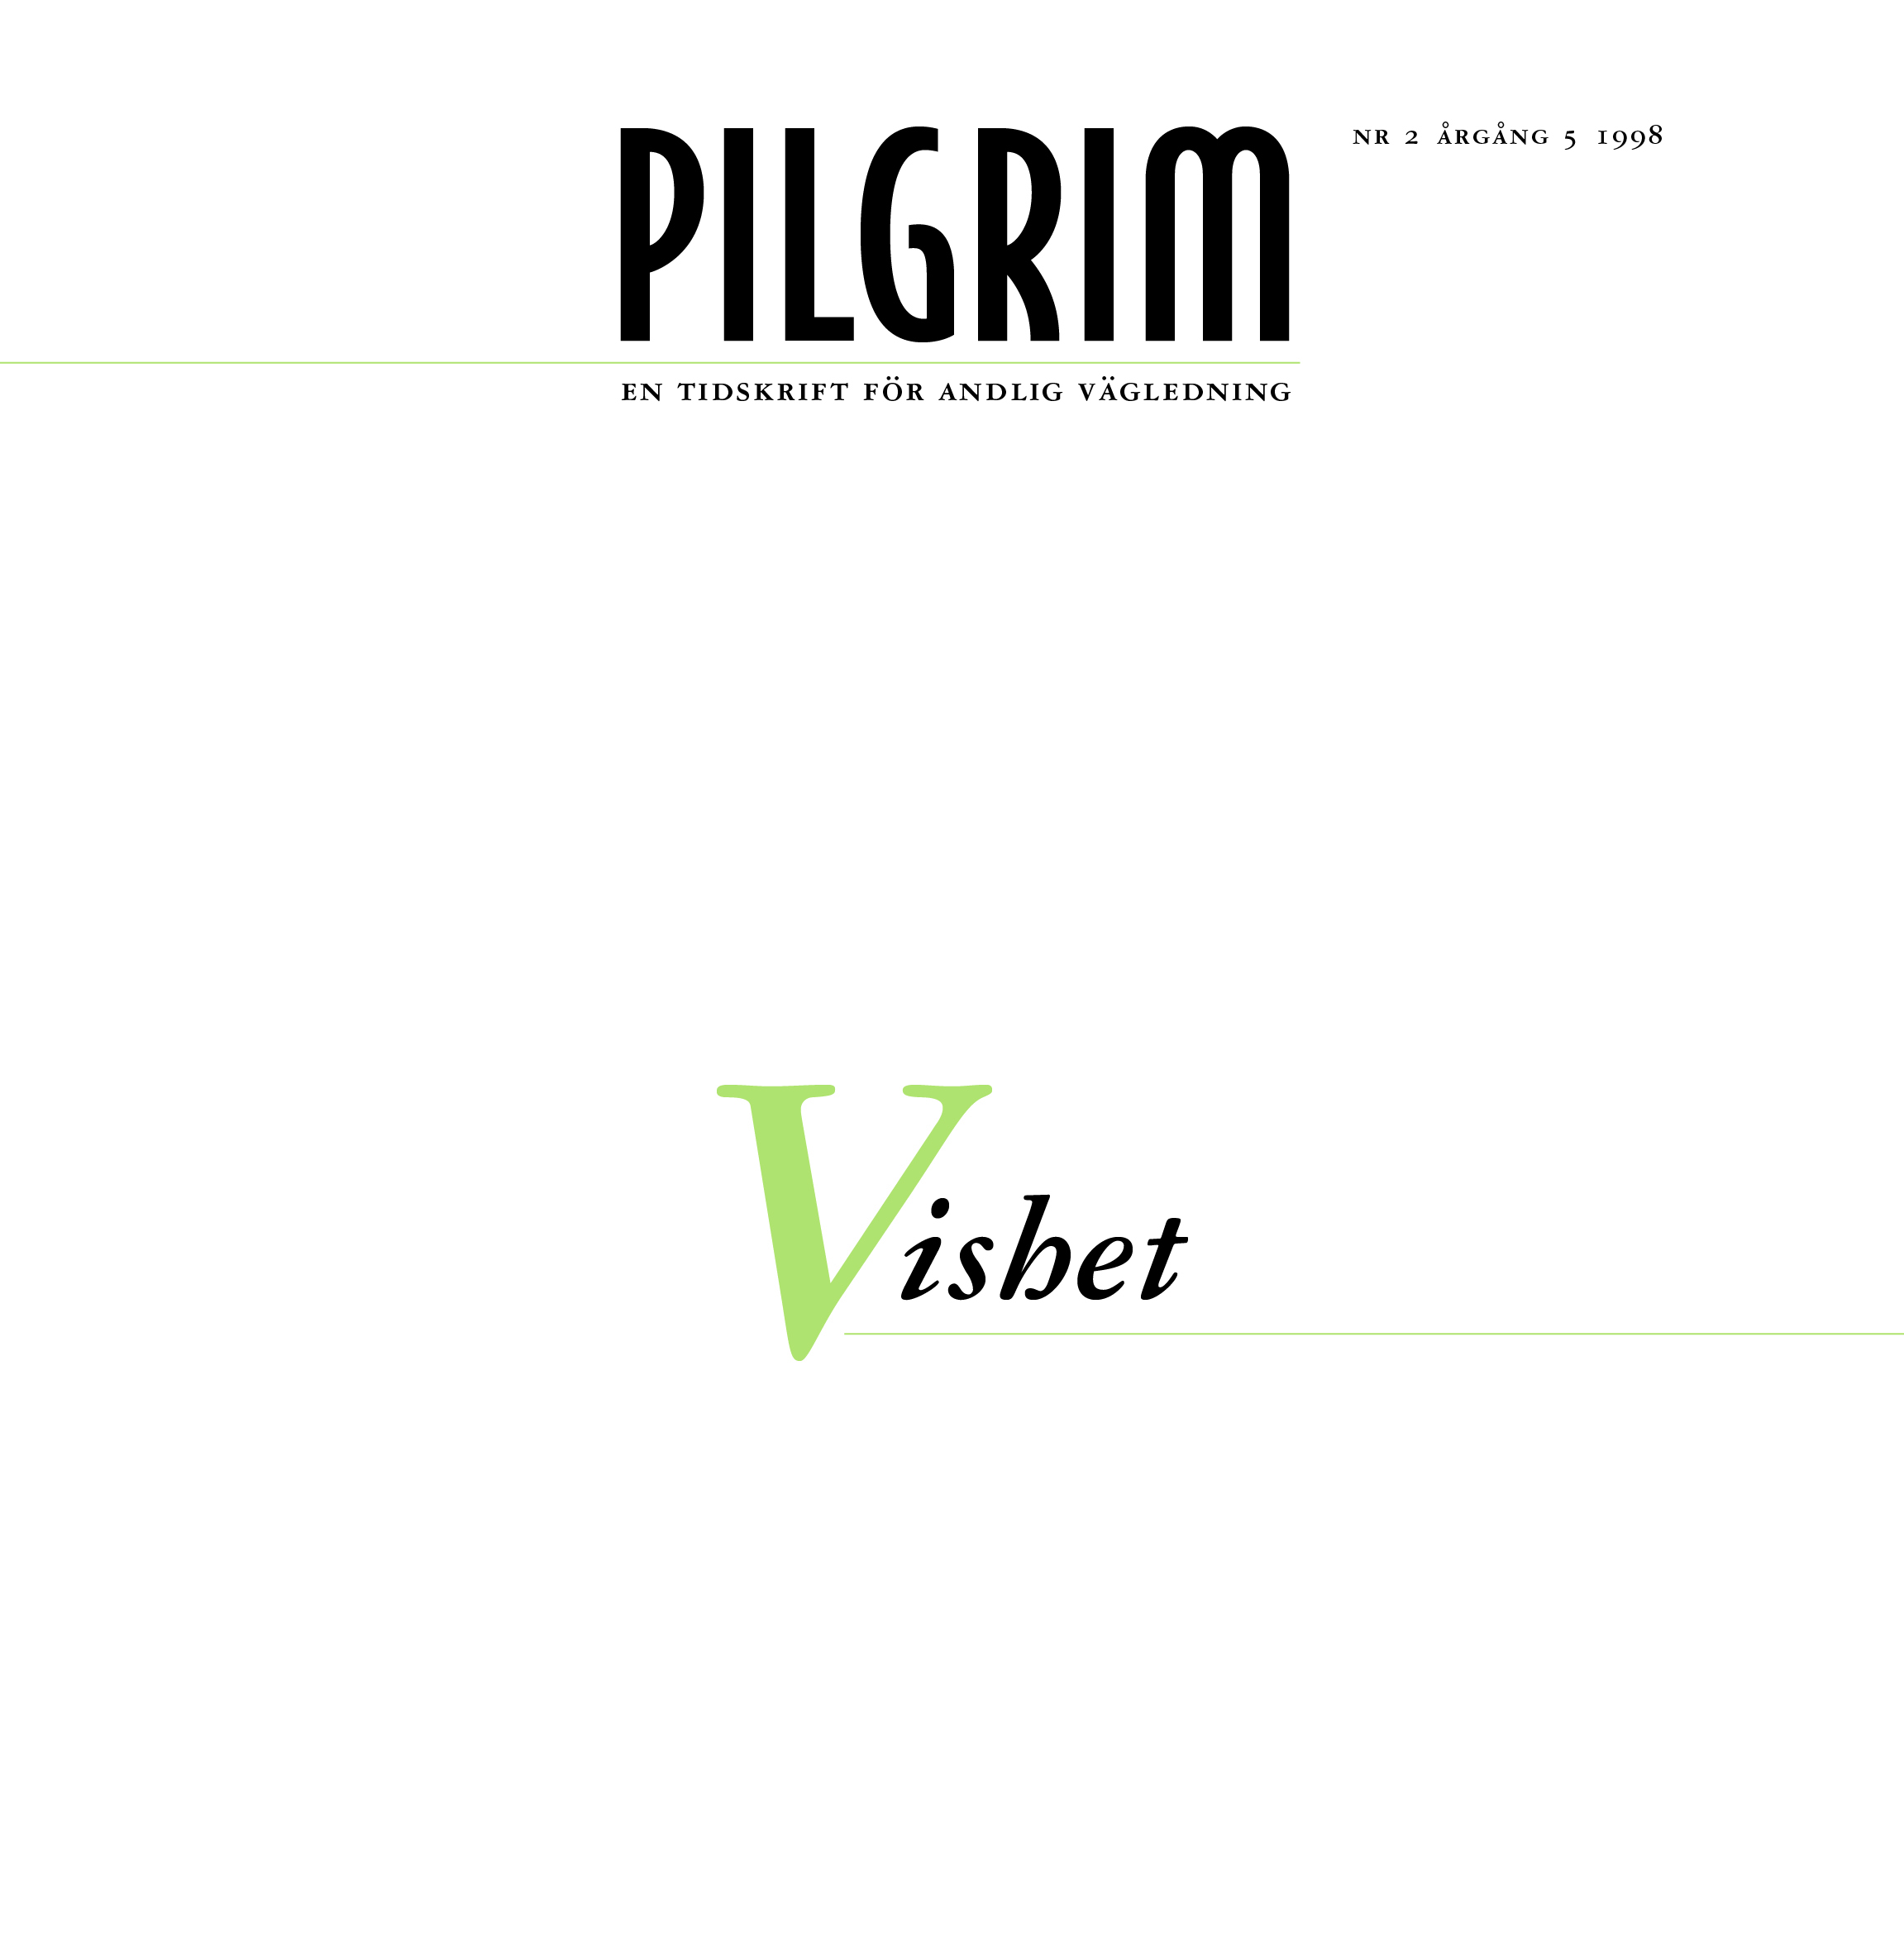 Pilgrim frams 1998-2